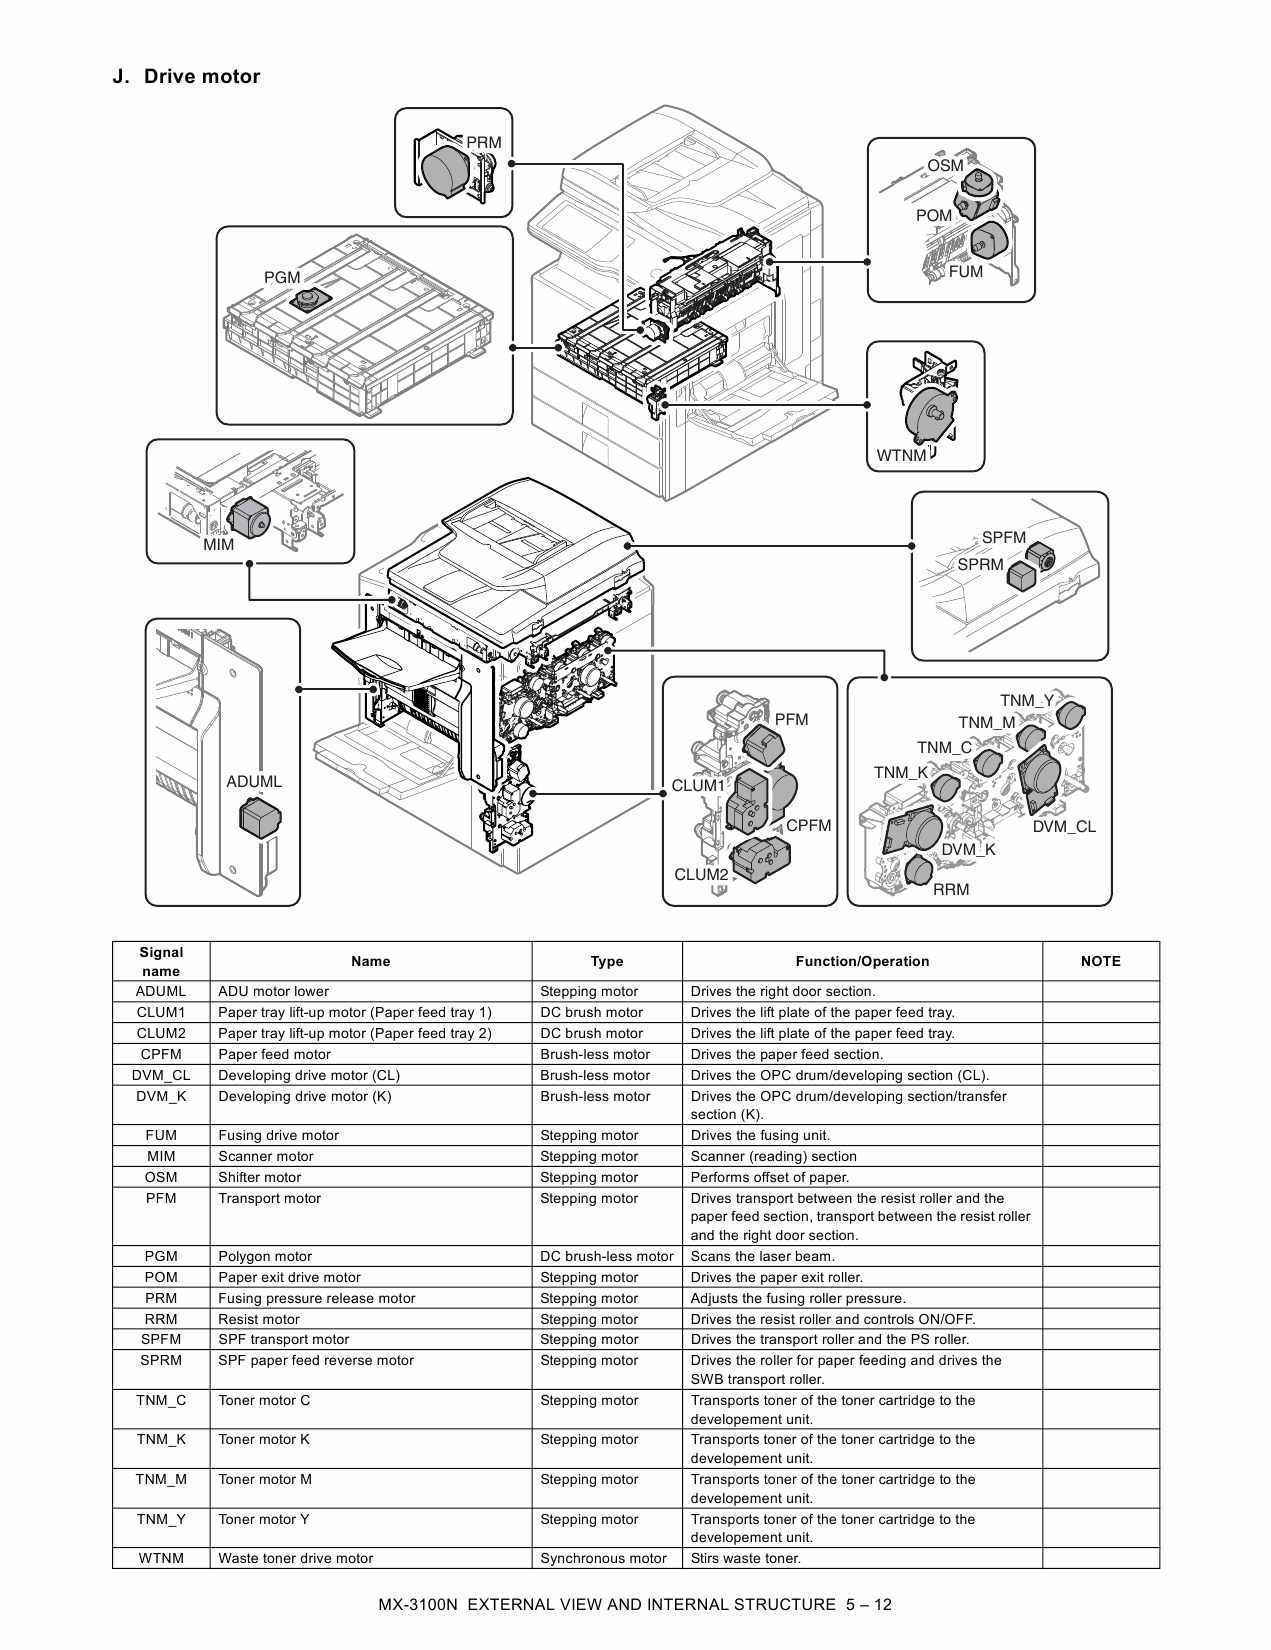 SHARP MX 2600 3100 N G Service Manual-3